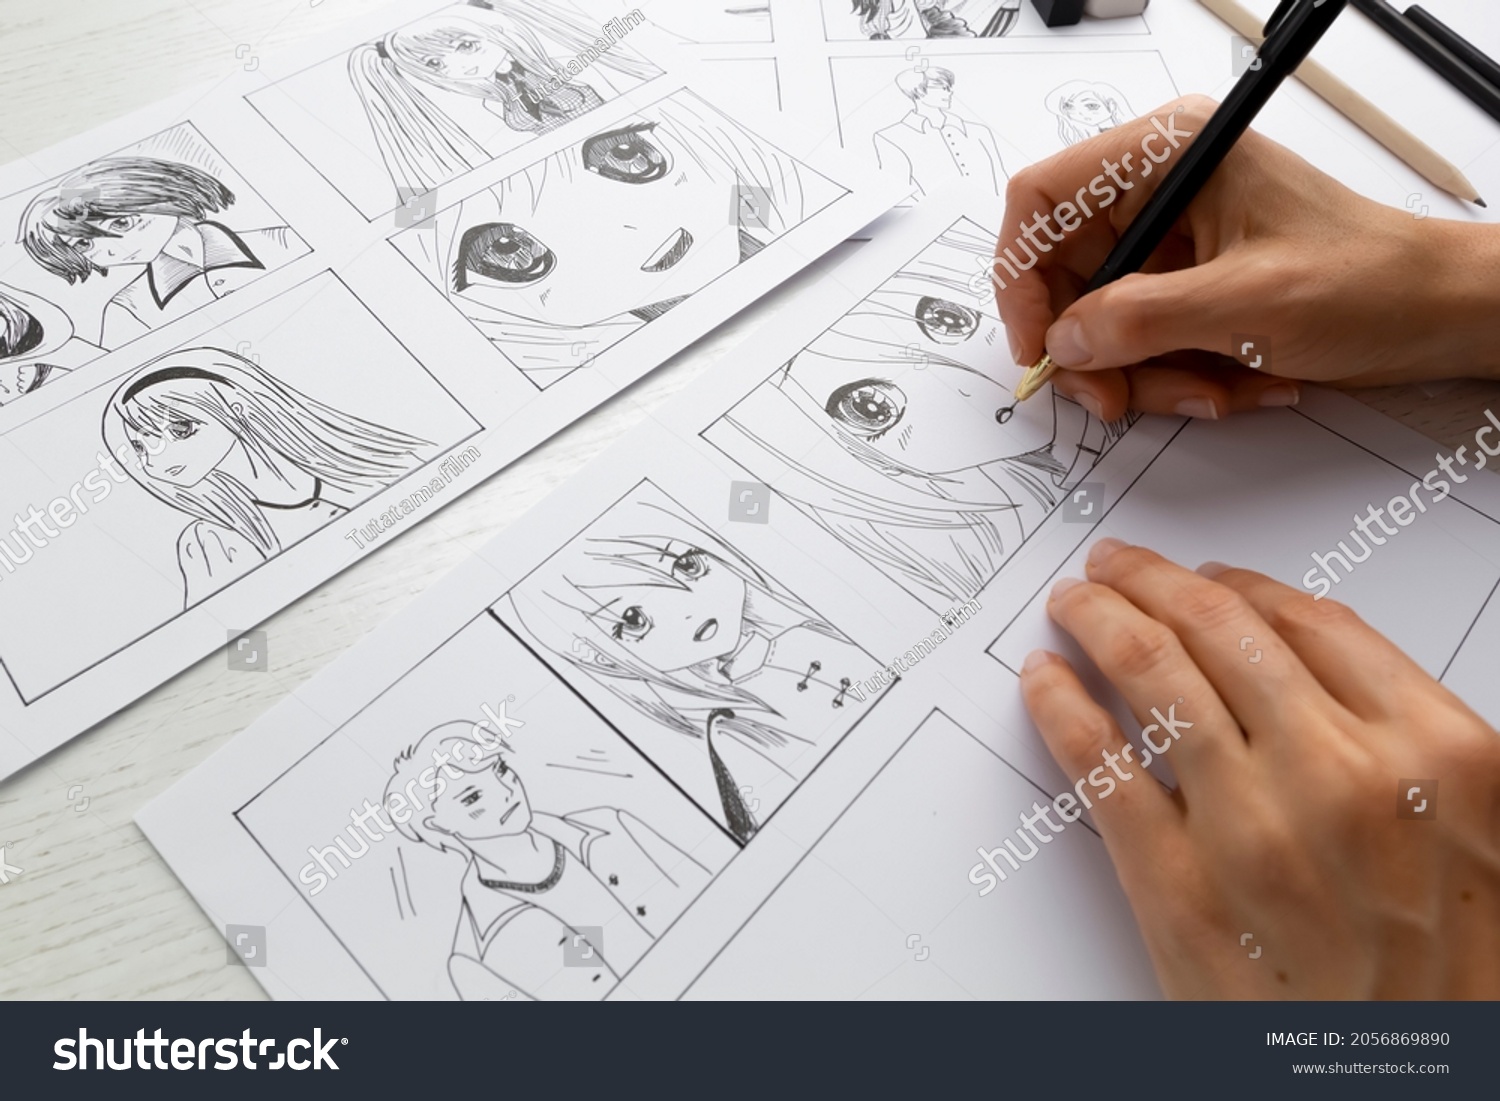 An artist draws a storyboard of an anime comics book. Manga style. #2056869890